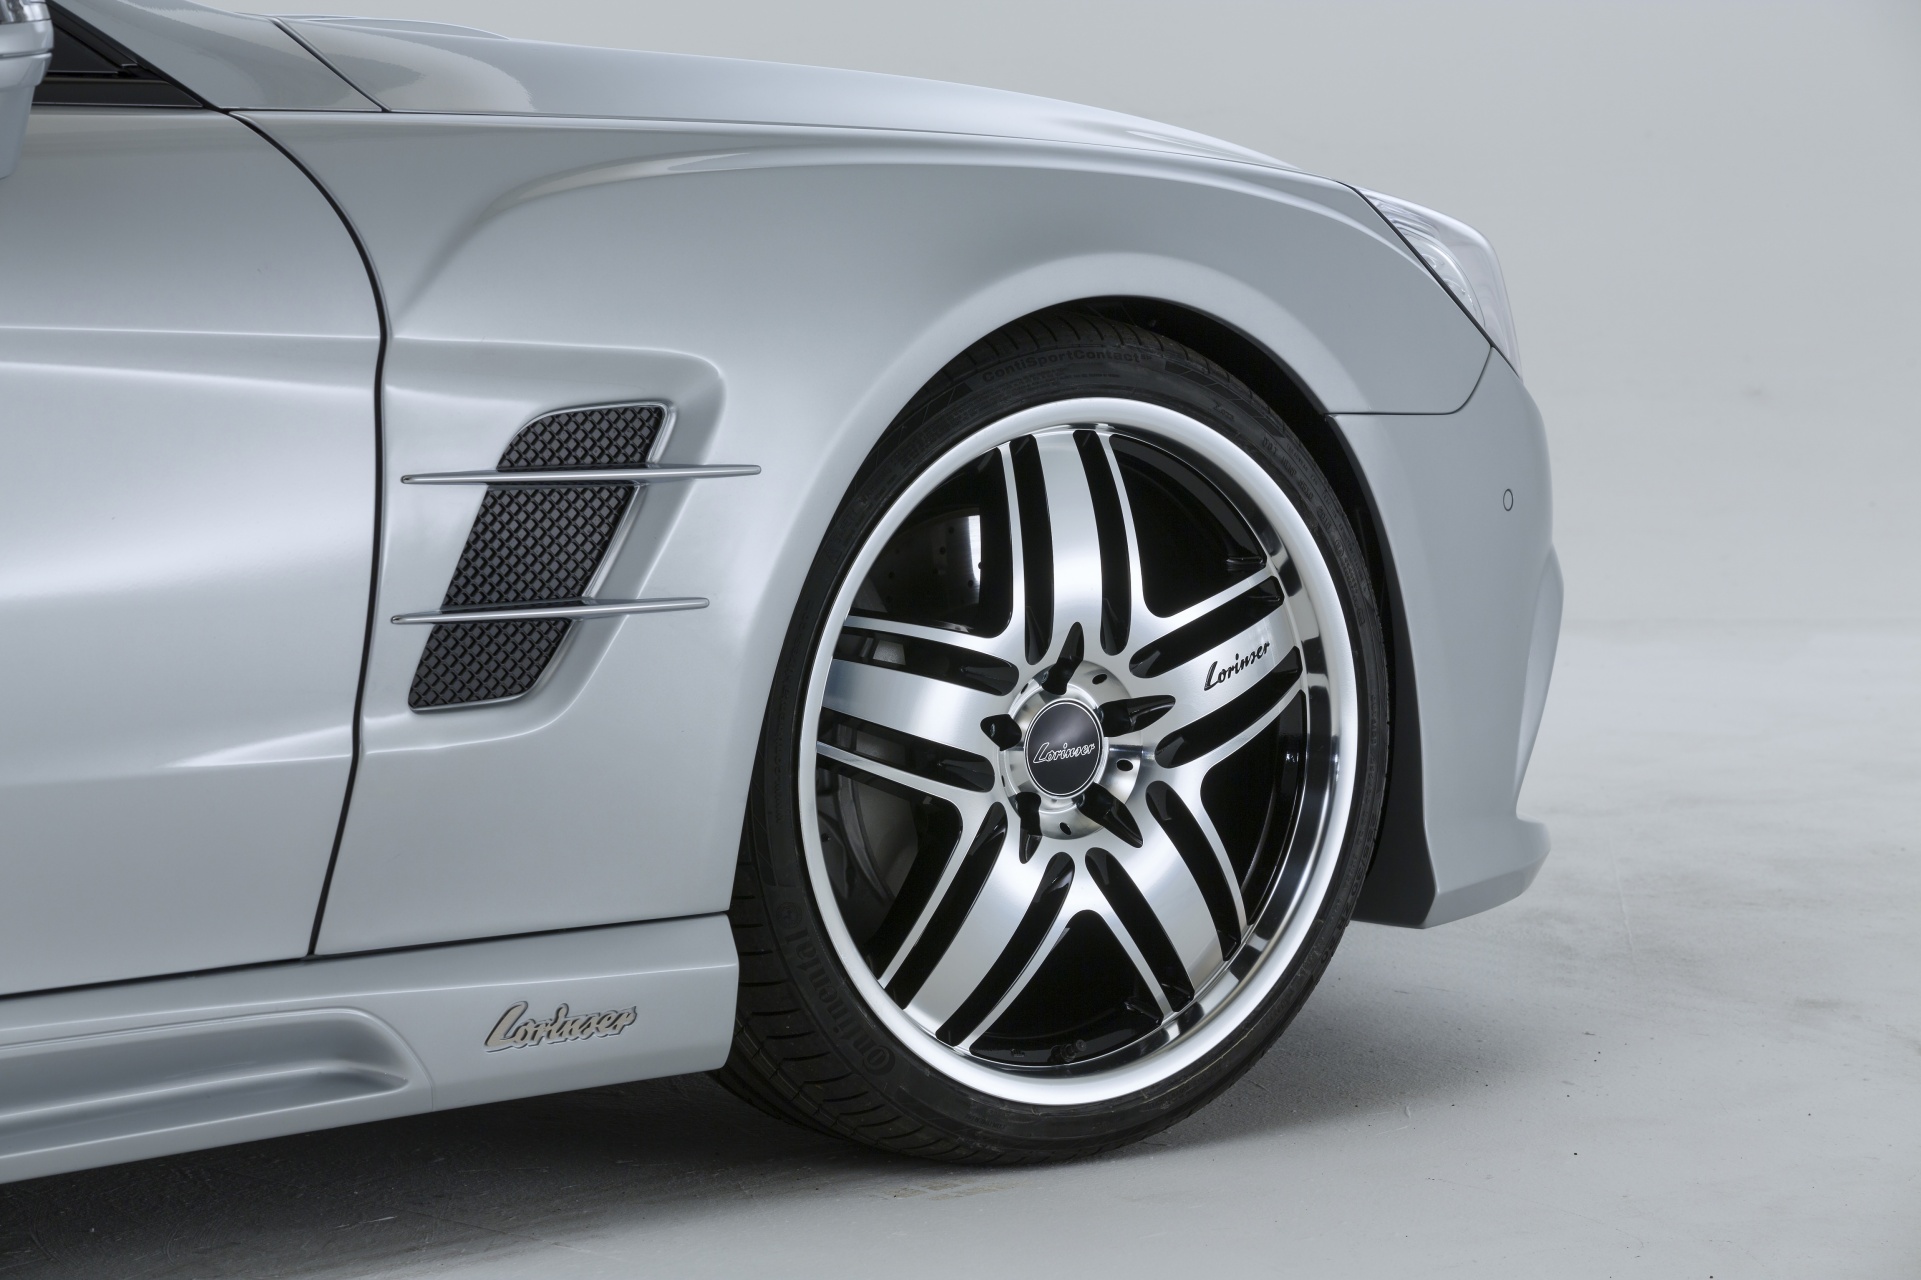 2012, Lorinser, Mercedes, Benz, S l, 500, R231, Tuning, Wheel, Wheels Wallpaper